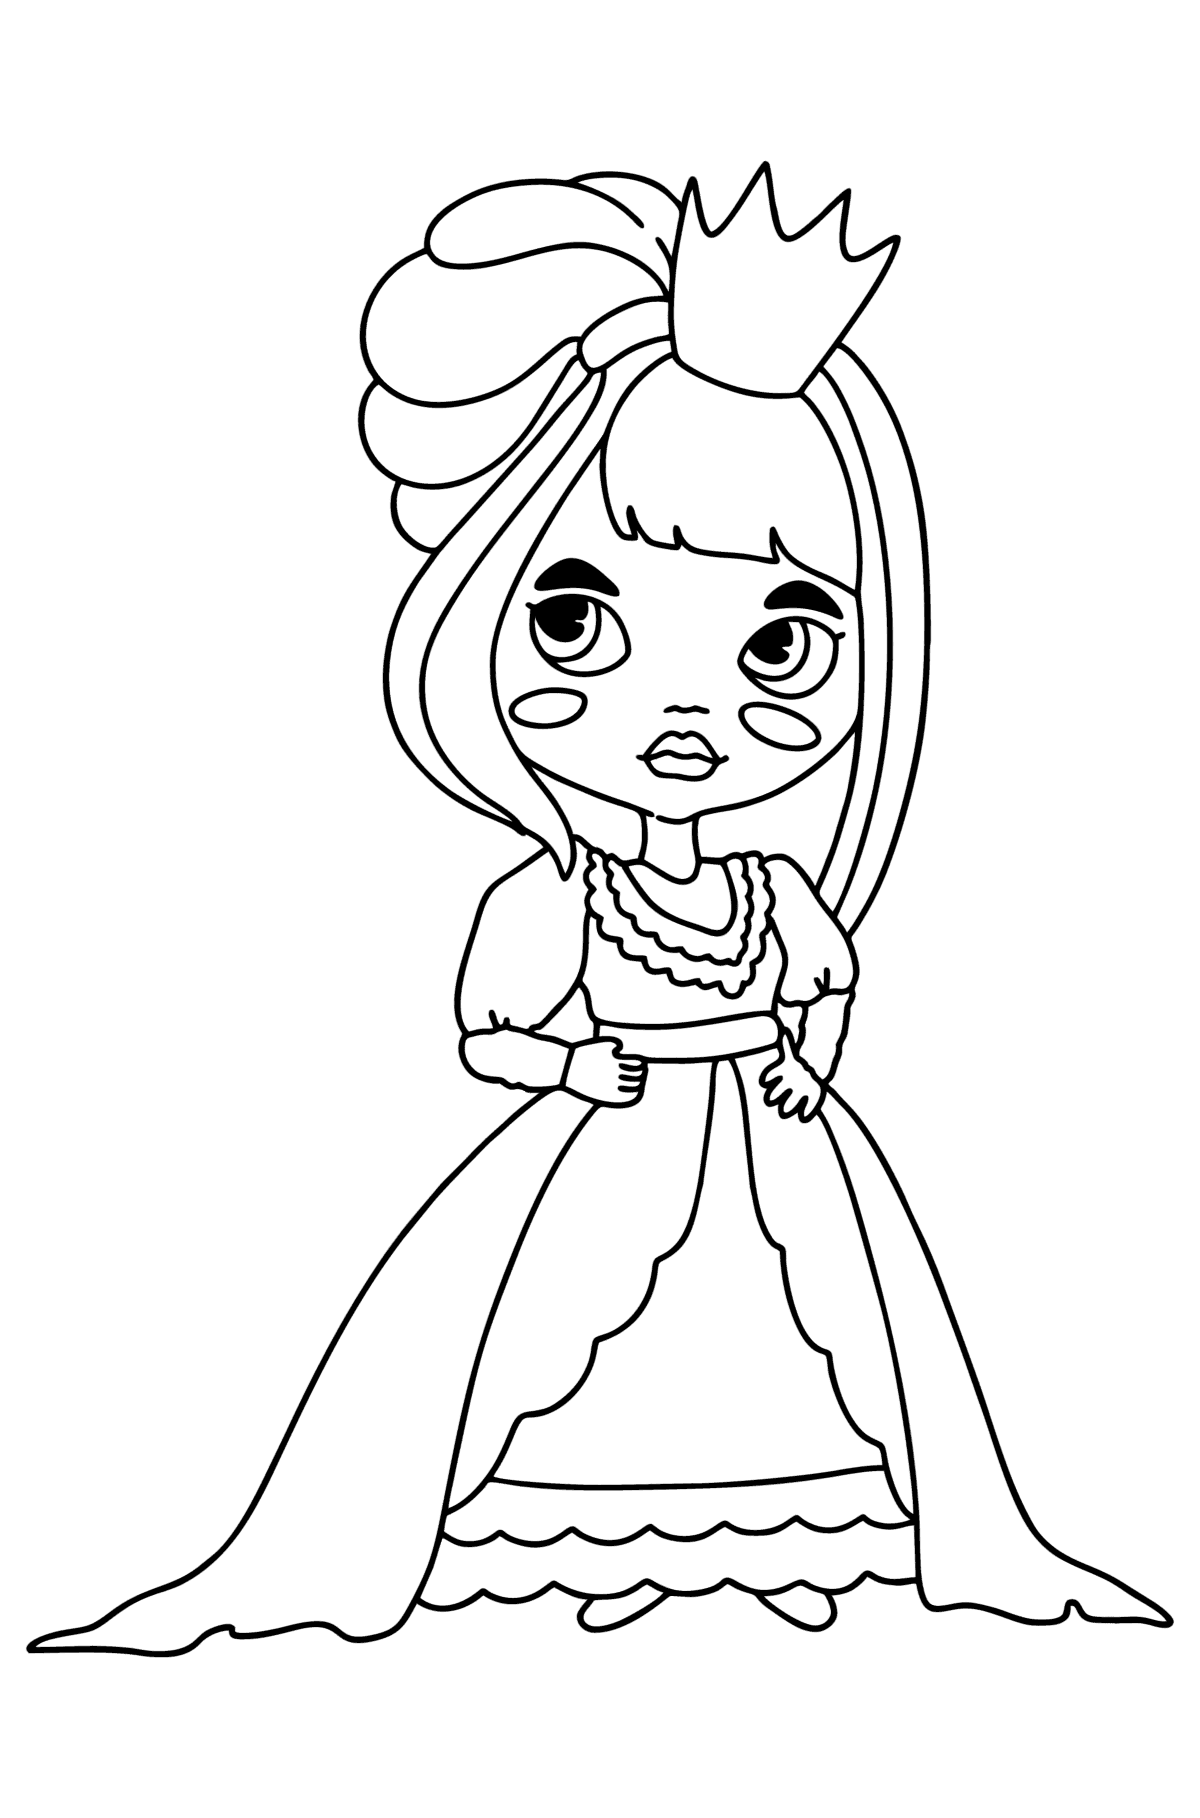 Tegning til fargelegging Prinsesse i en lys kjole - Tegninger til fargelegging for barn